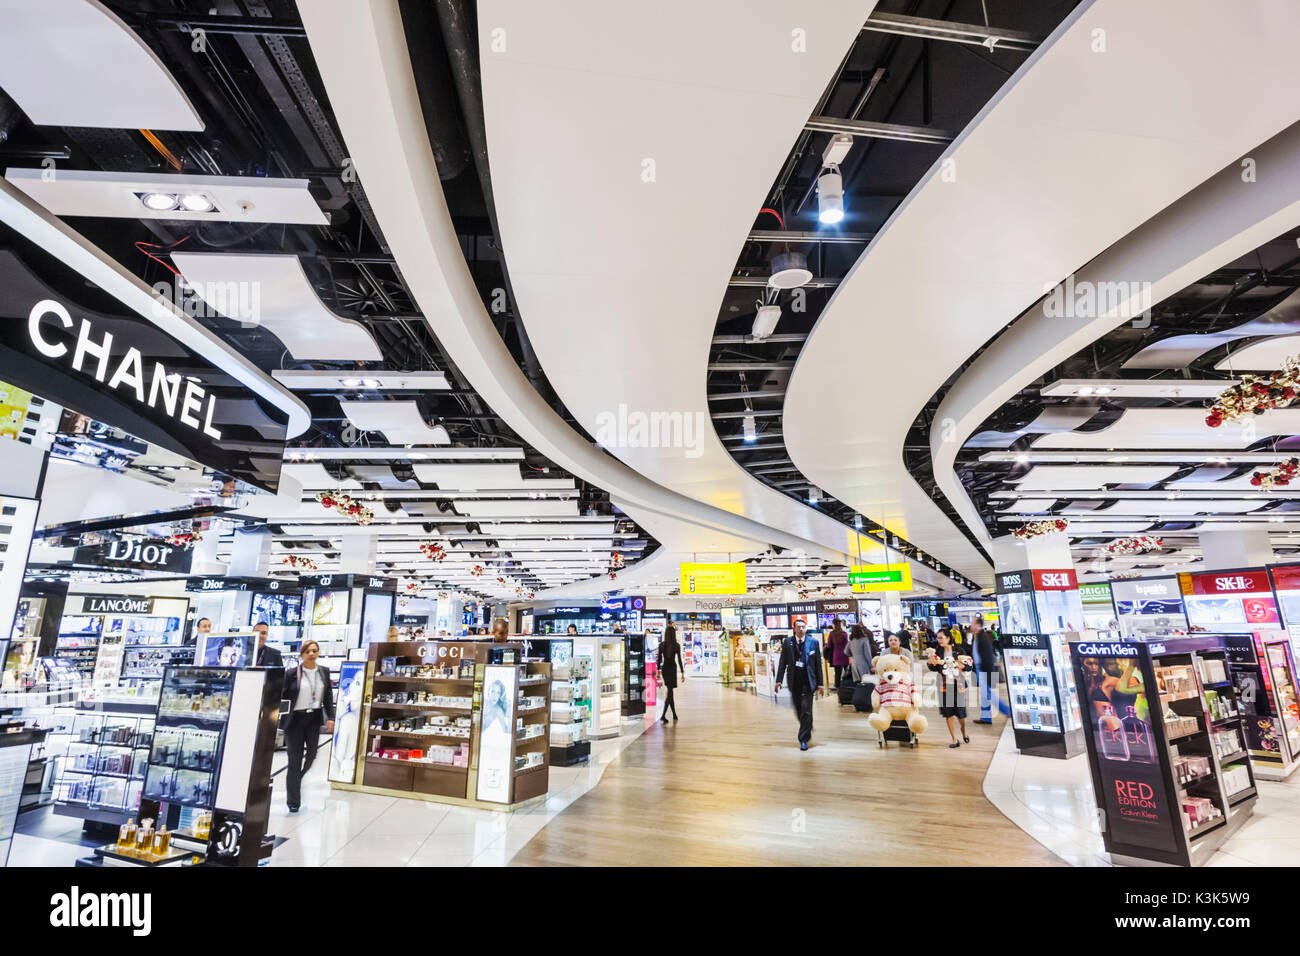 Inghilterra, Londra Heathrow Airport Duty Free Shopping Arcade Foto Stock